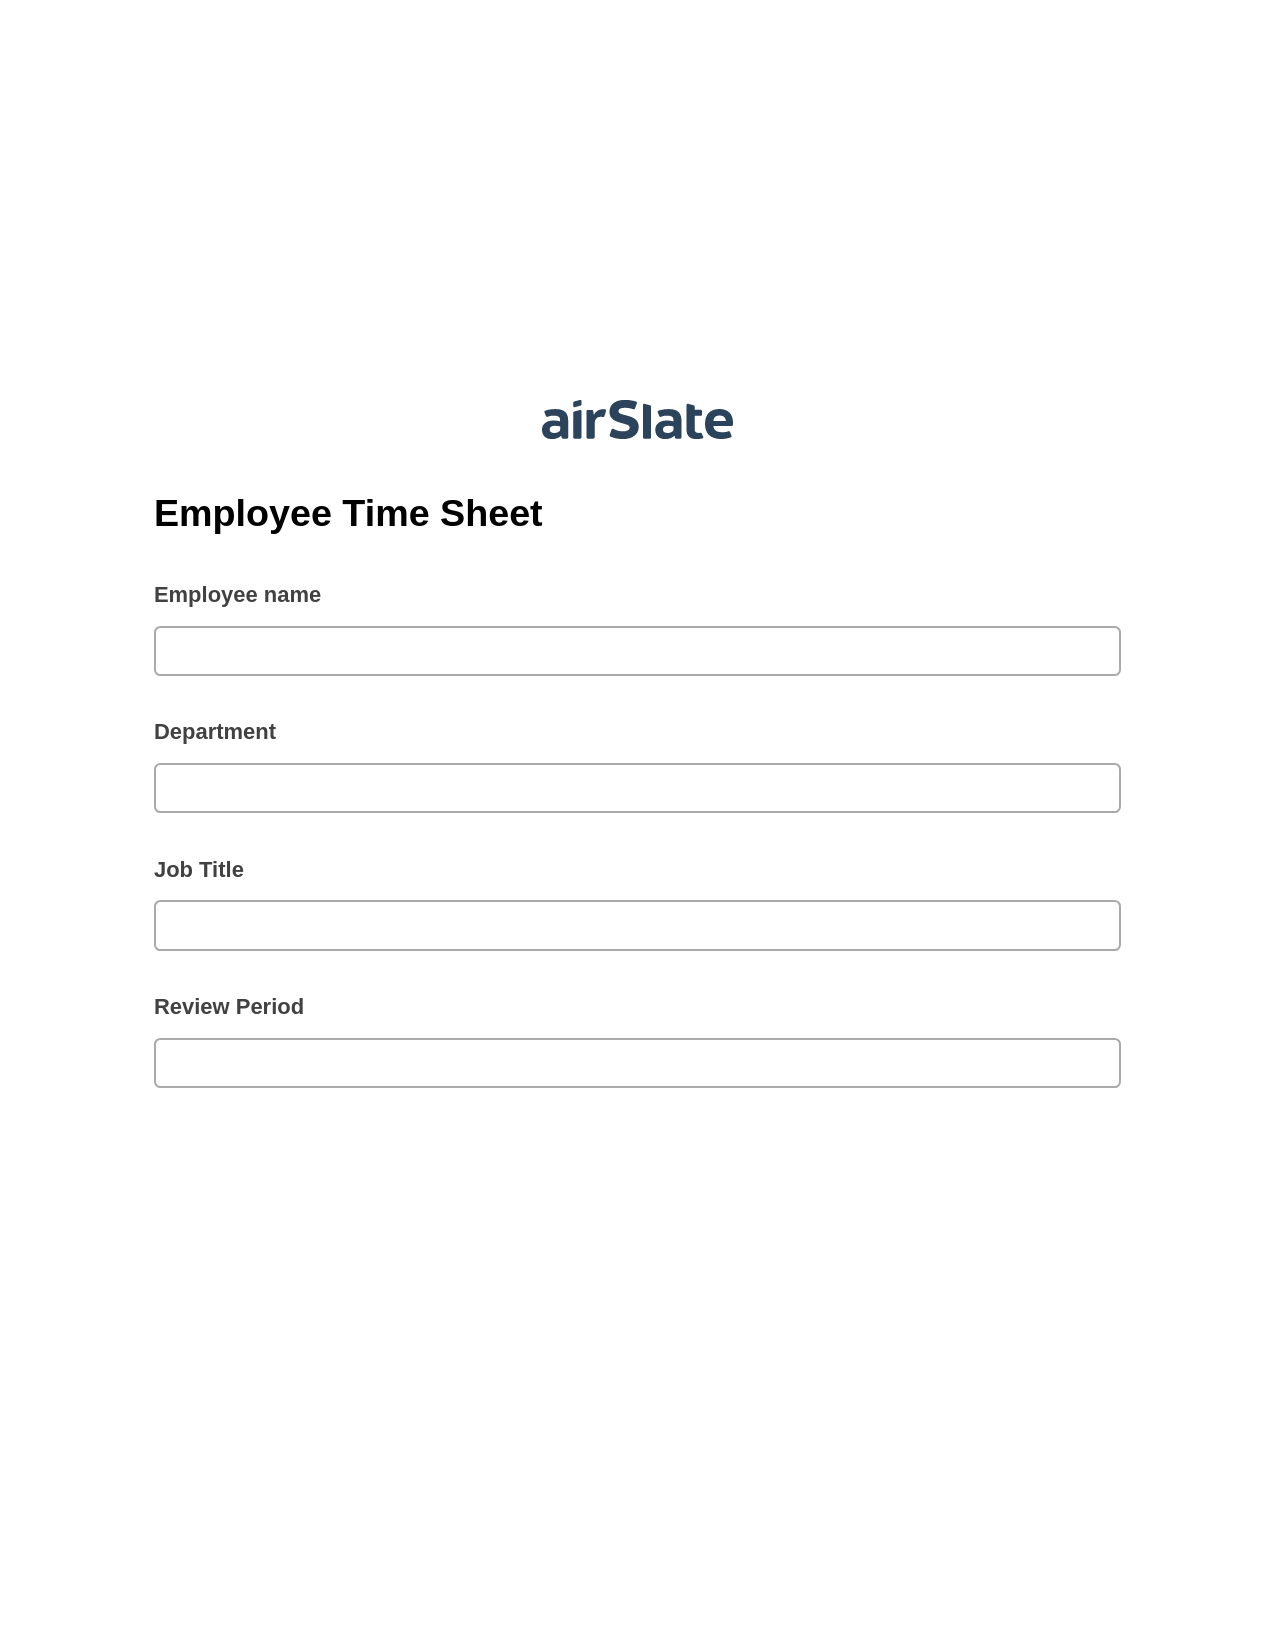 Employee Time Sheet Pre-fill Dropdowns from MySQL Bot, Create slate addon, Archive to Google Drive Bot